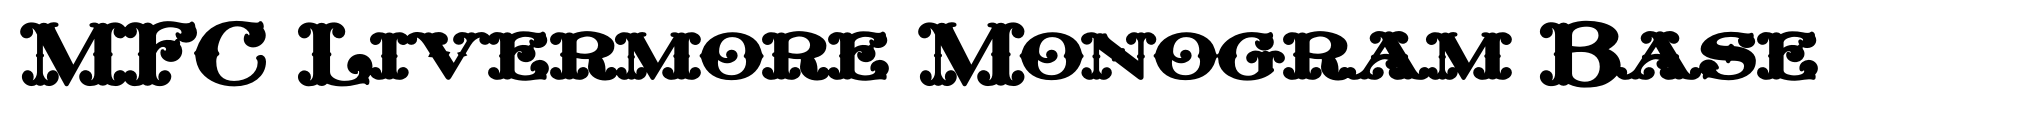 MFC Livermore Monogram Base image